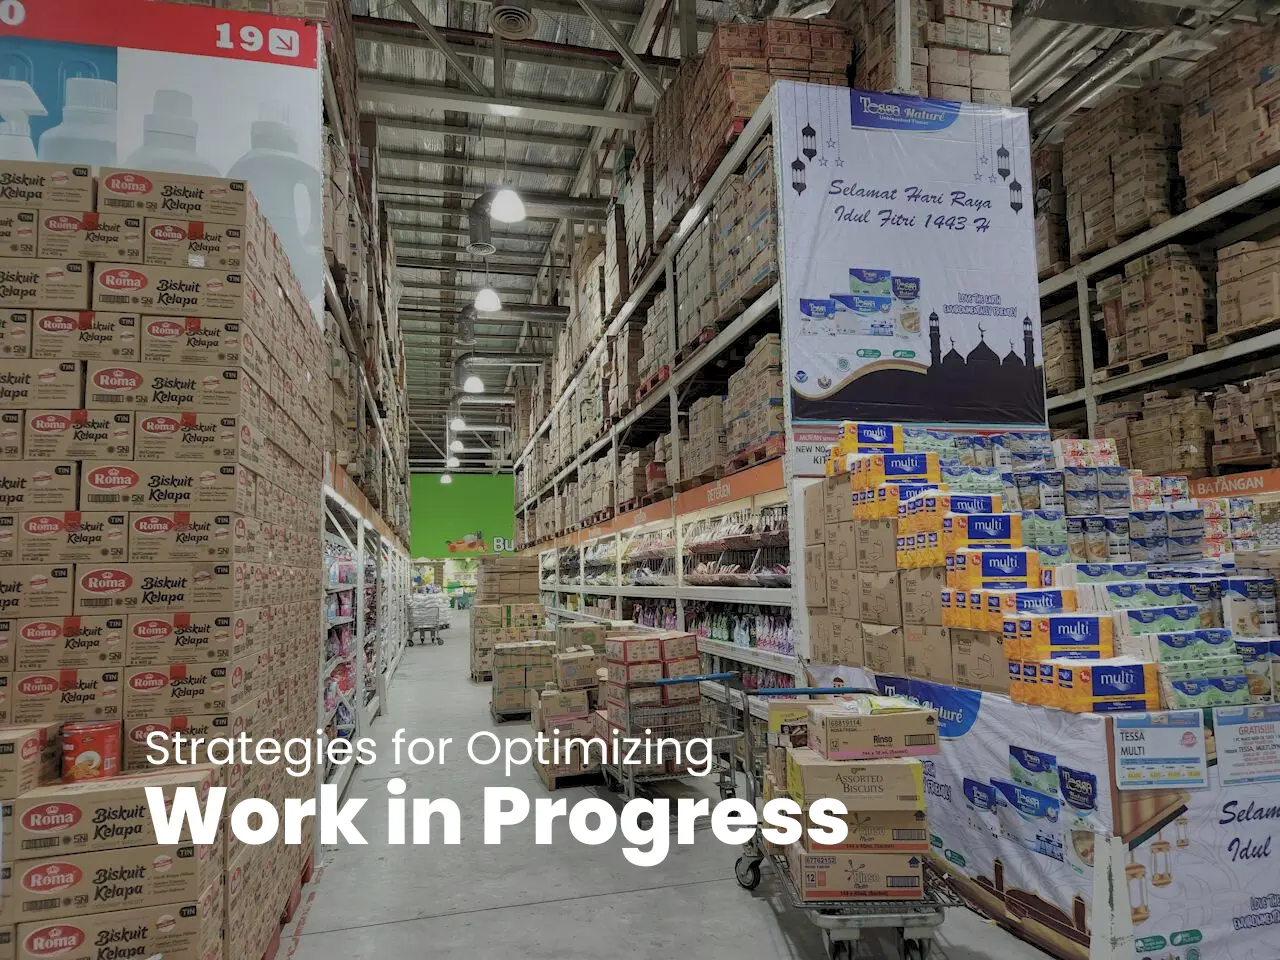 Strategies to Optimize Work in Progress